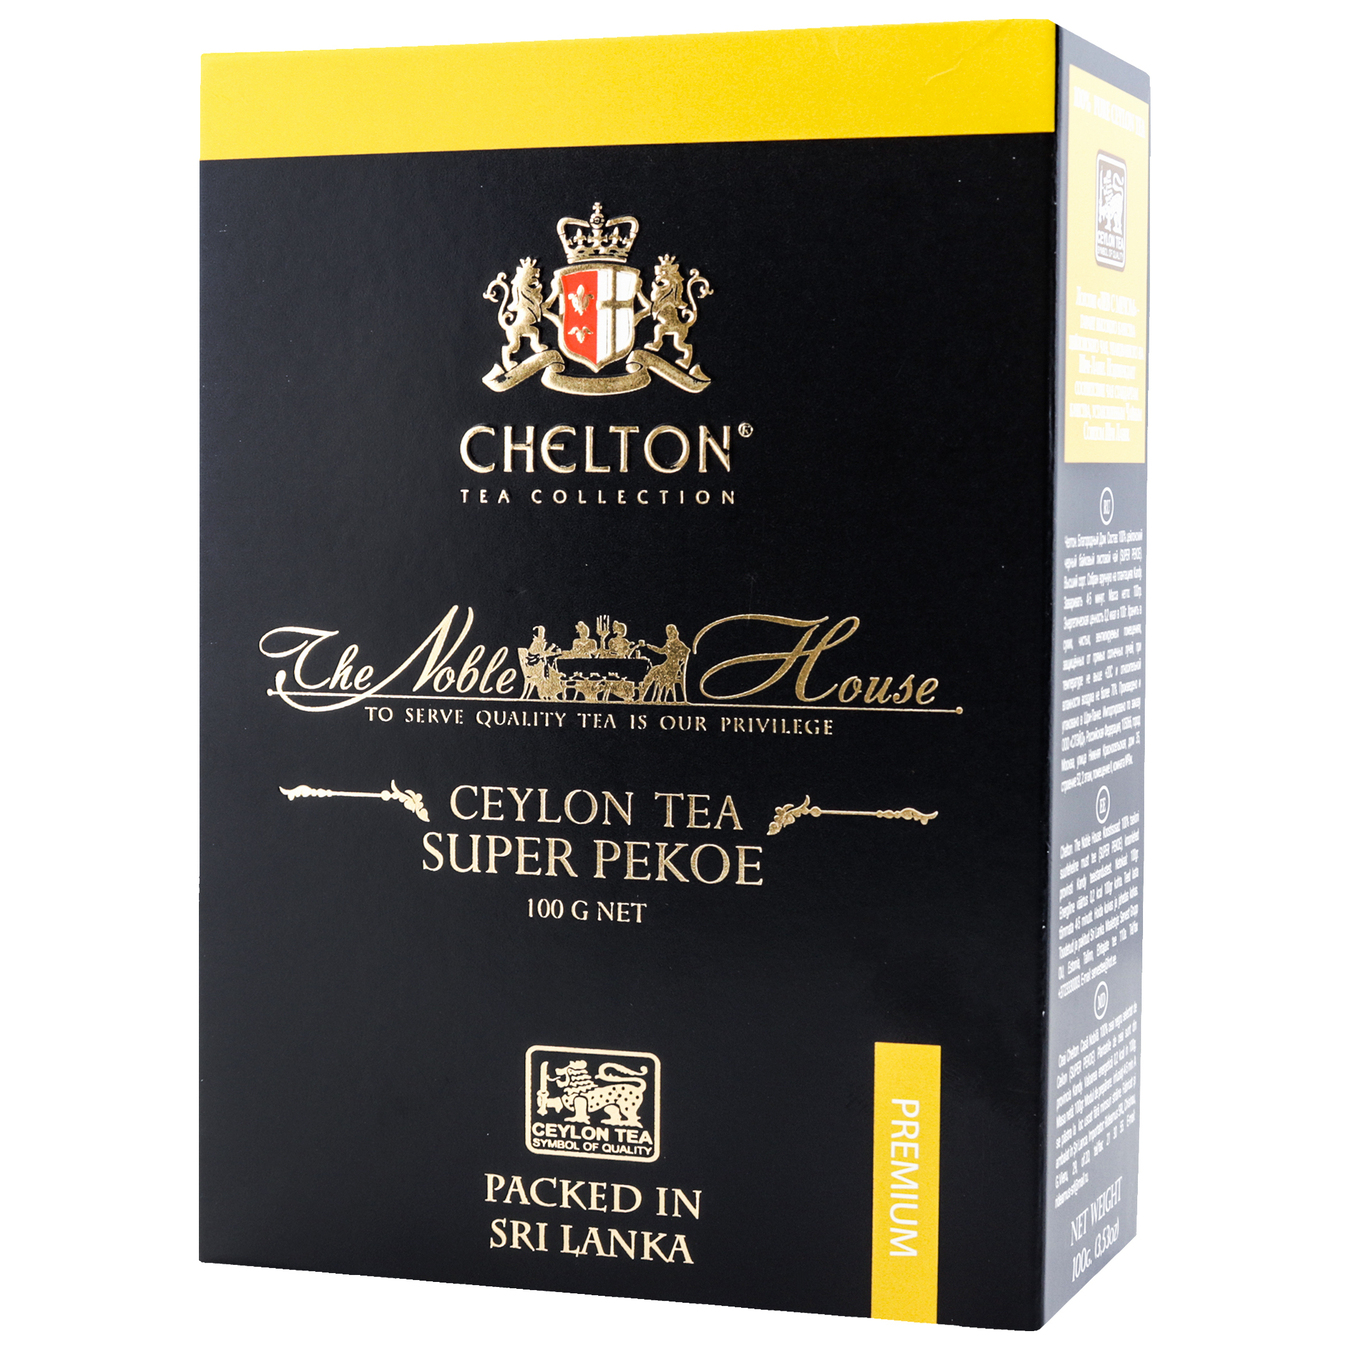 Чай Chelton The Noble House Super Pekoe чорний цейлонський листовий 100г